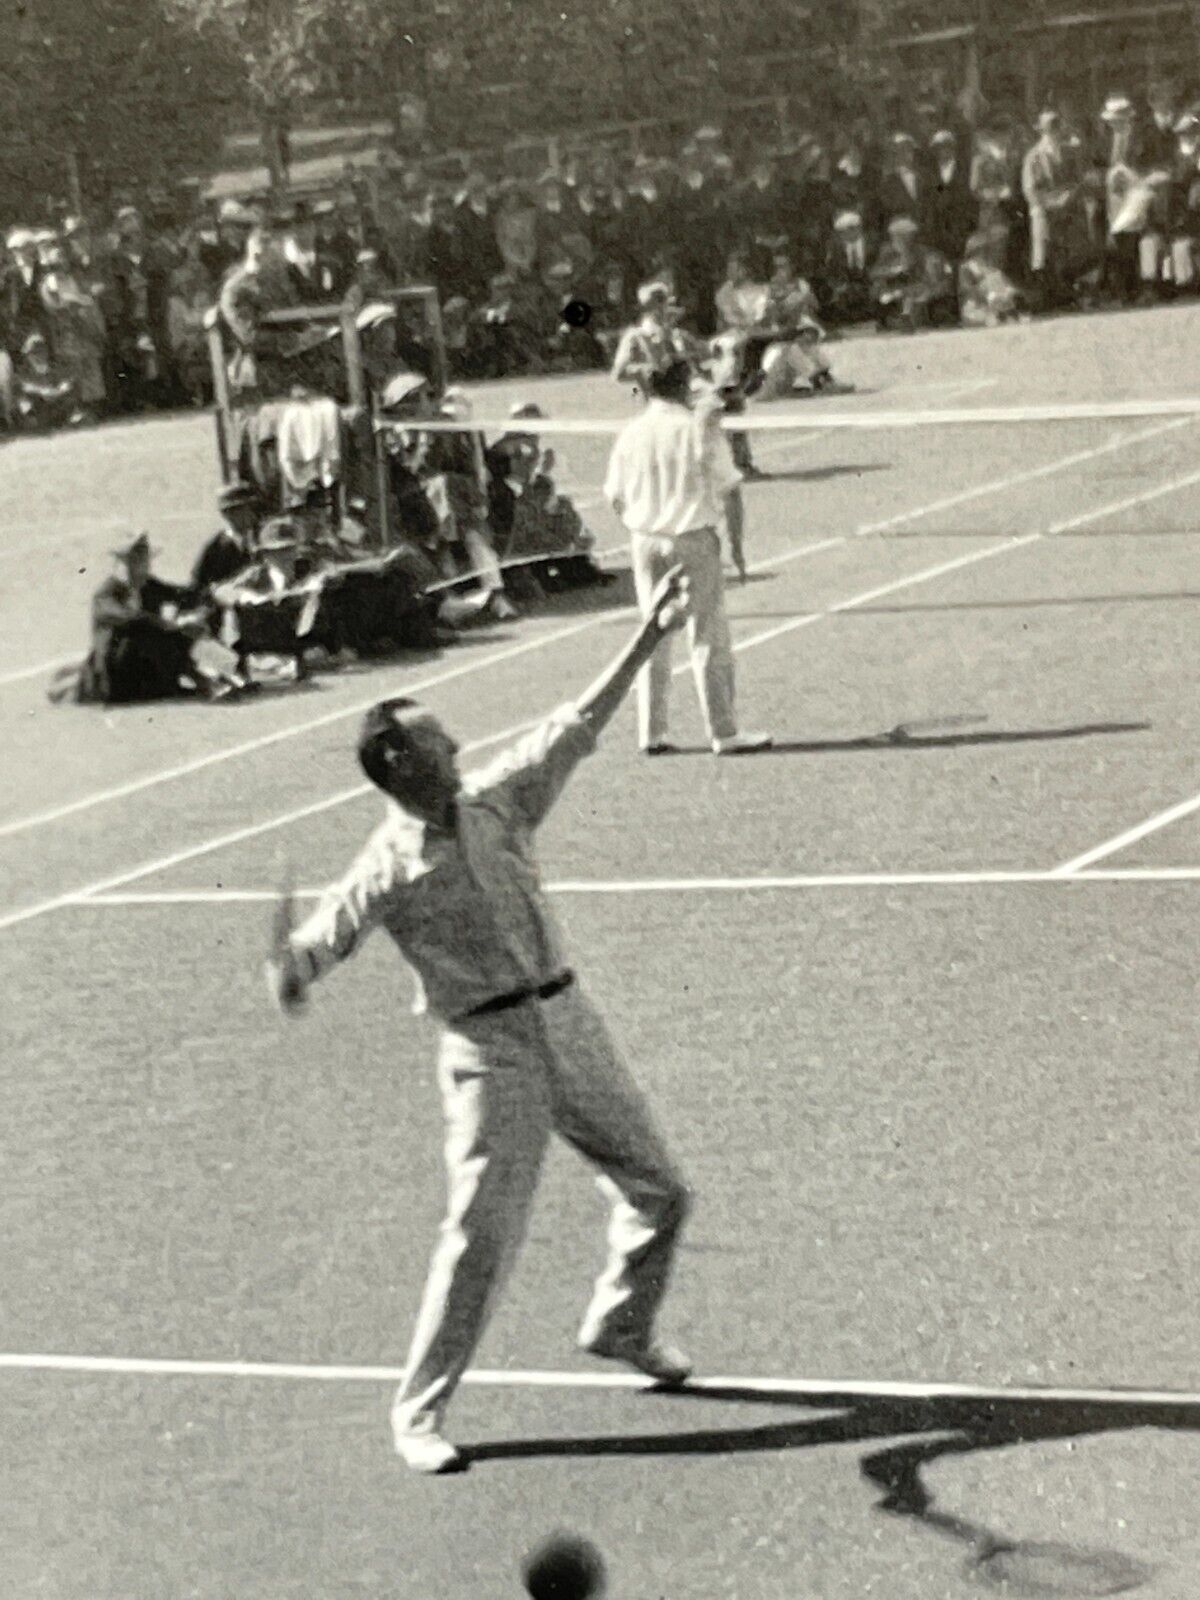 Z2 Photograph Bill Johnston Peck Griffin Vs. Kinsey Bros. Tennis Match Serving 